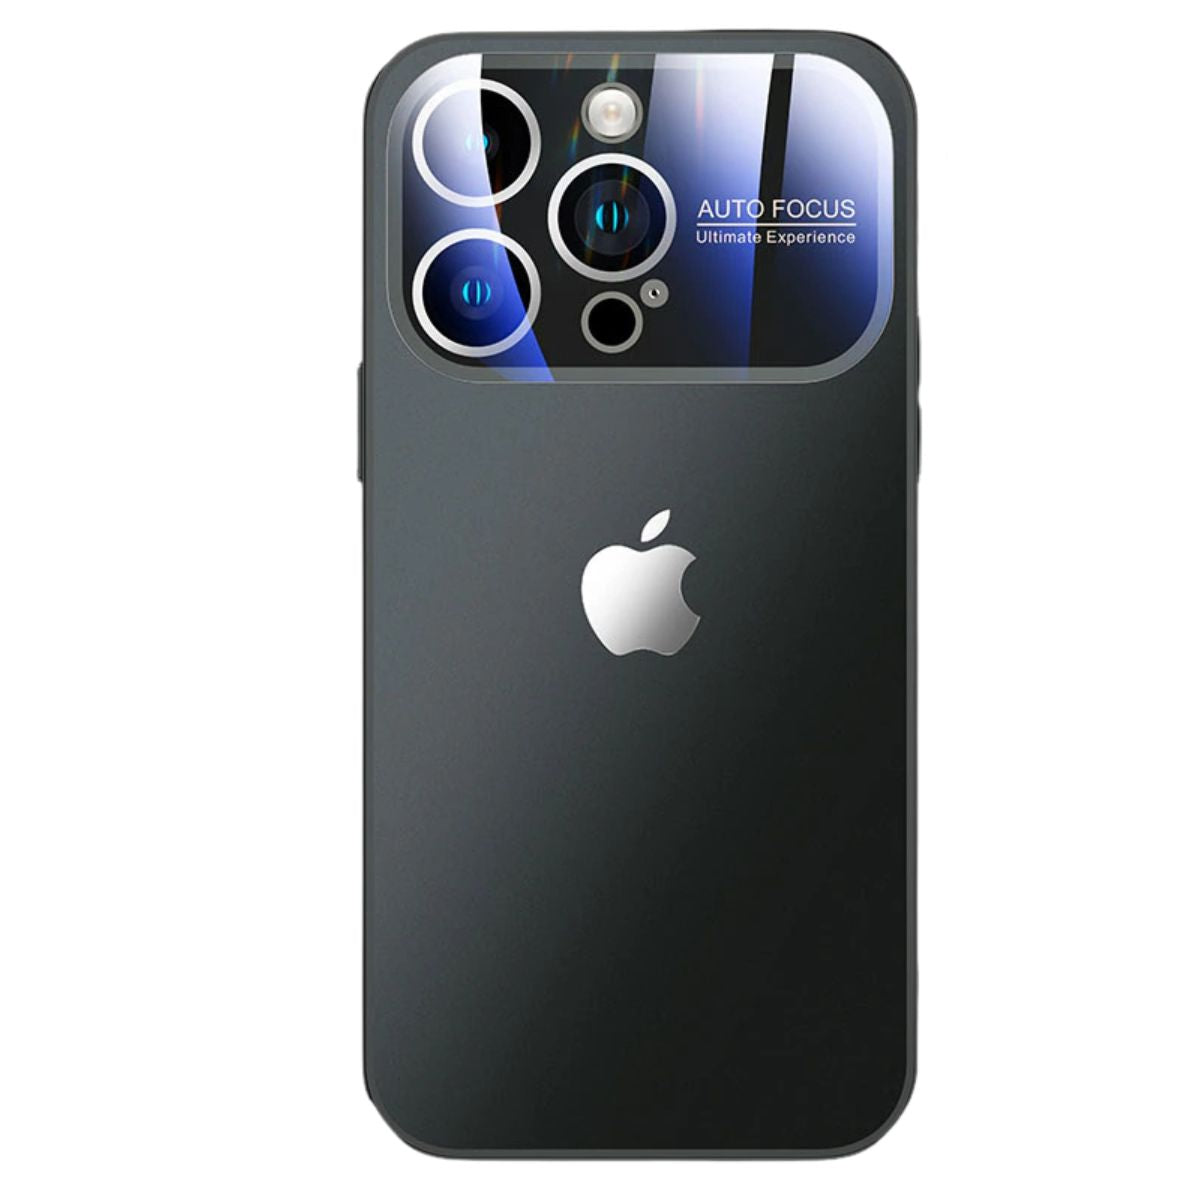 Carcasa iPhone Vidrio Templado Auto Focus